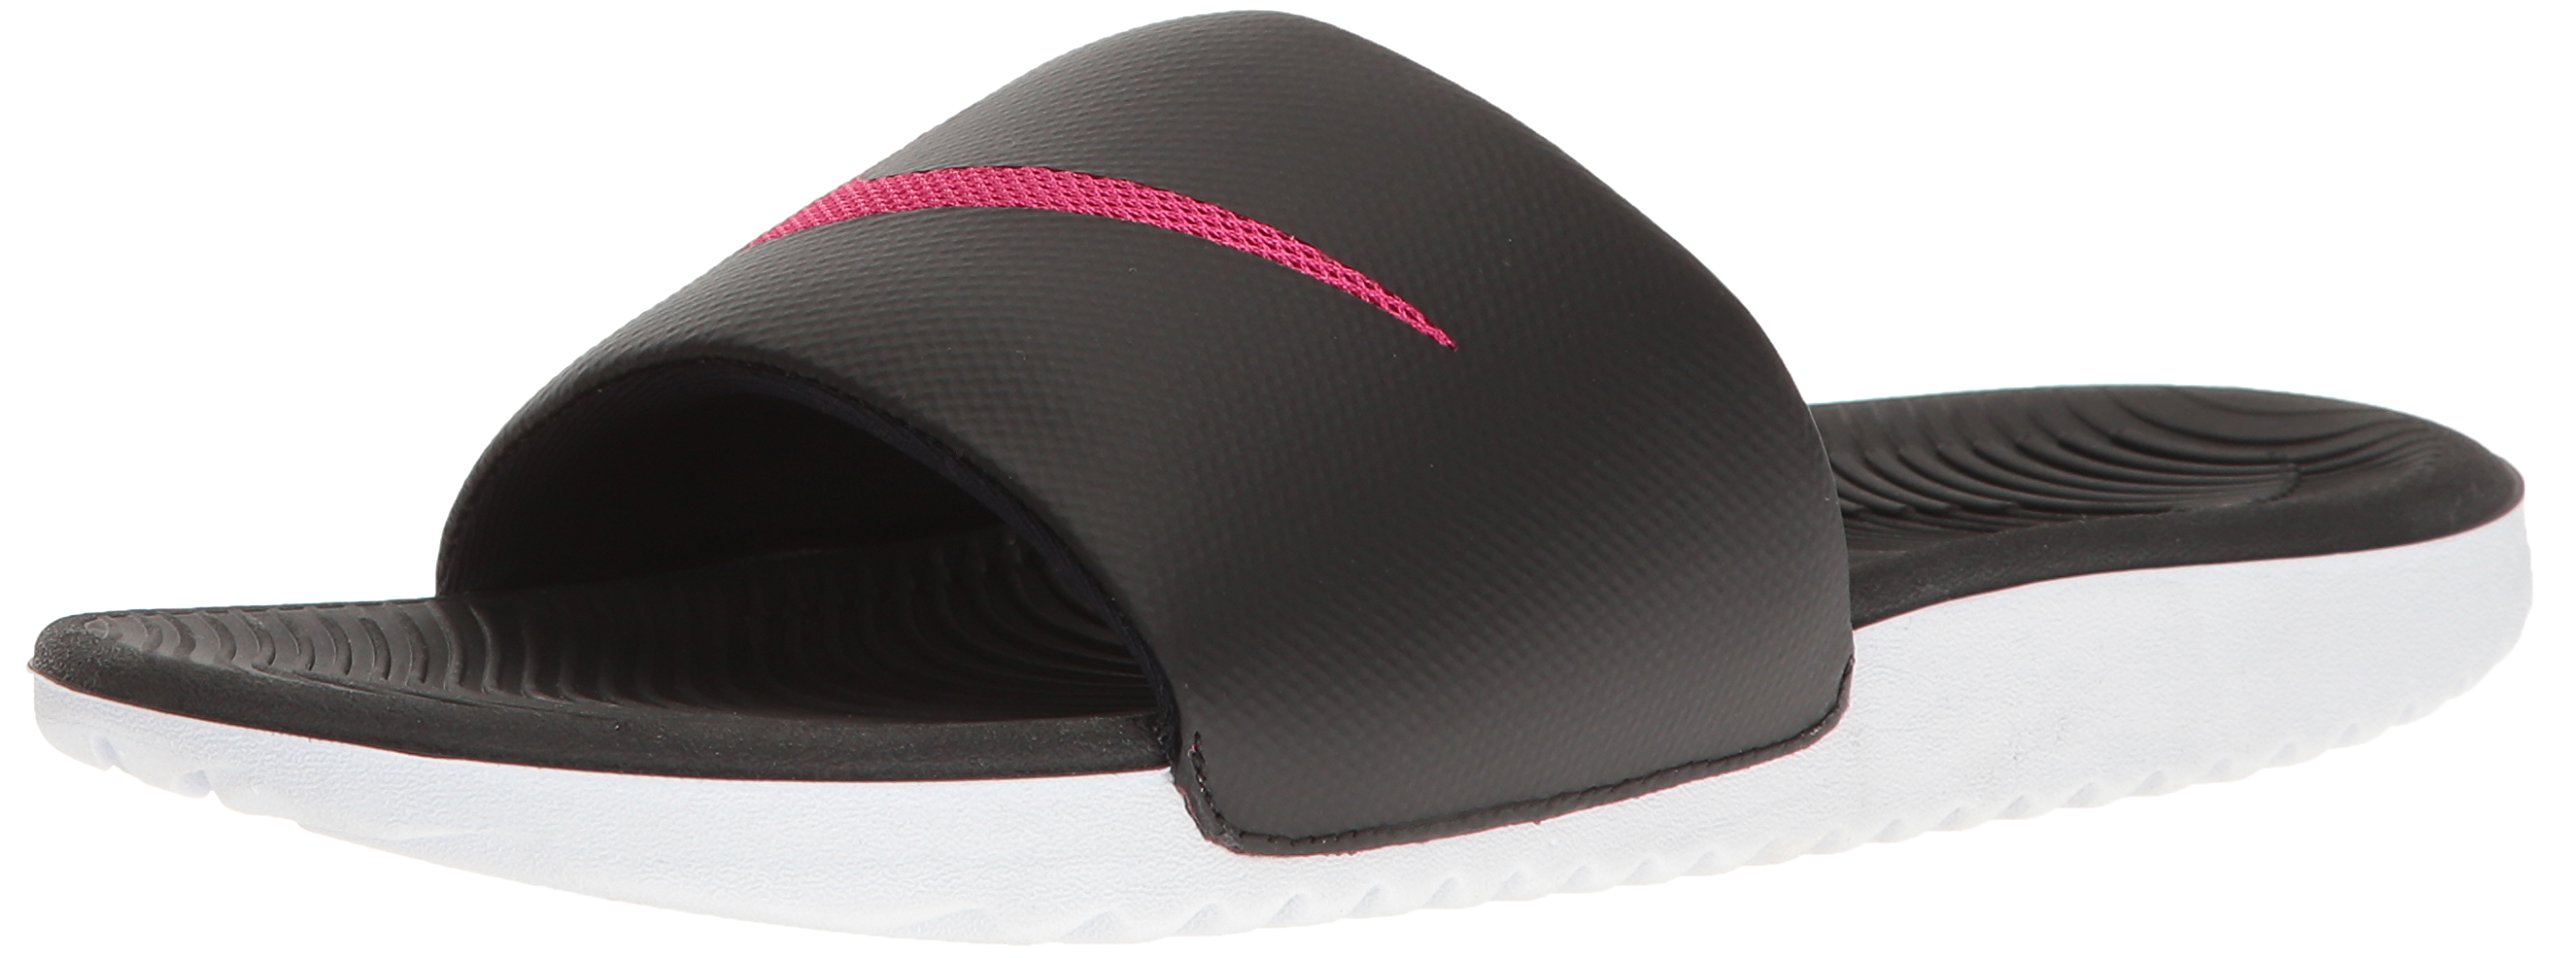 Nike 834588-060: Kawa Womens Black Vivid Pink Sandal - Walmart.com